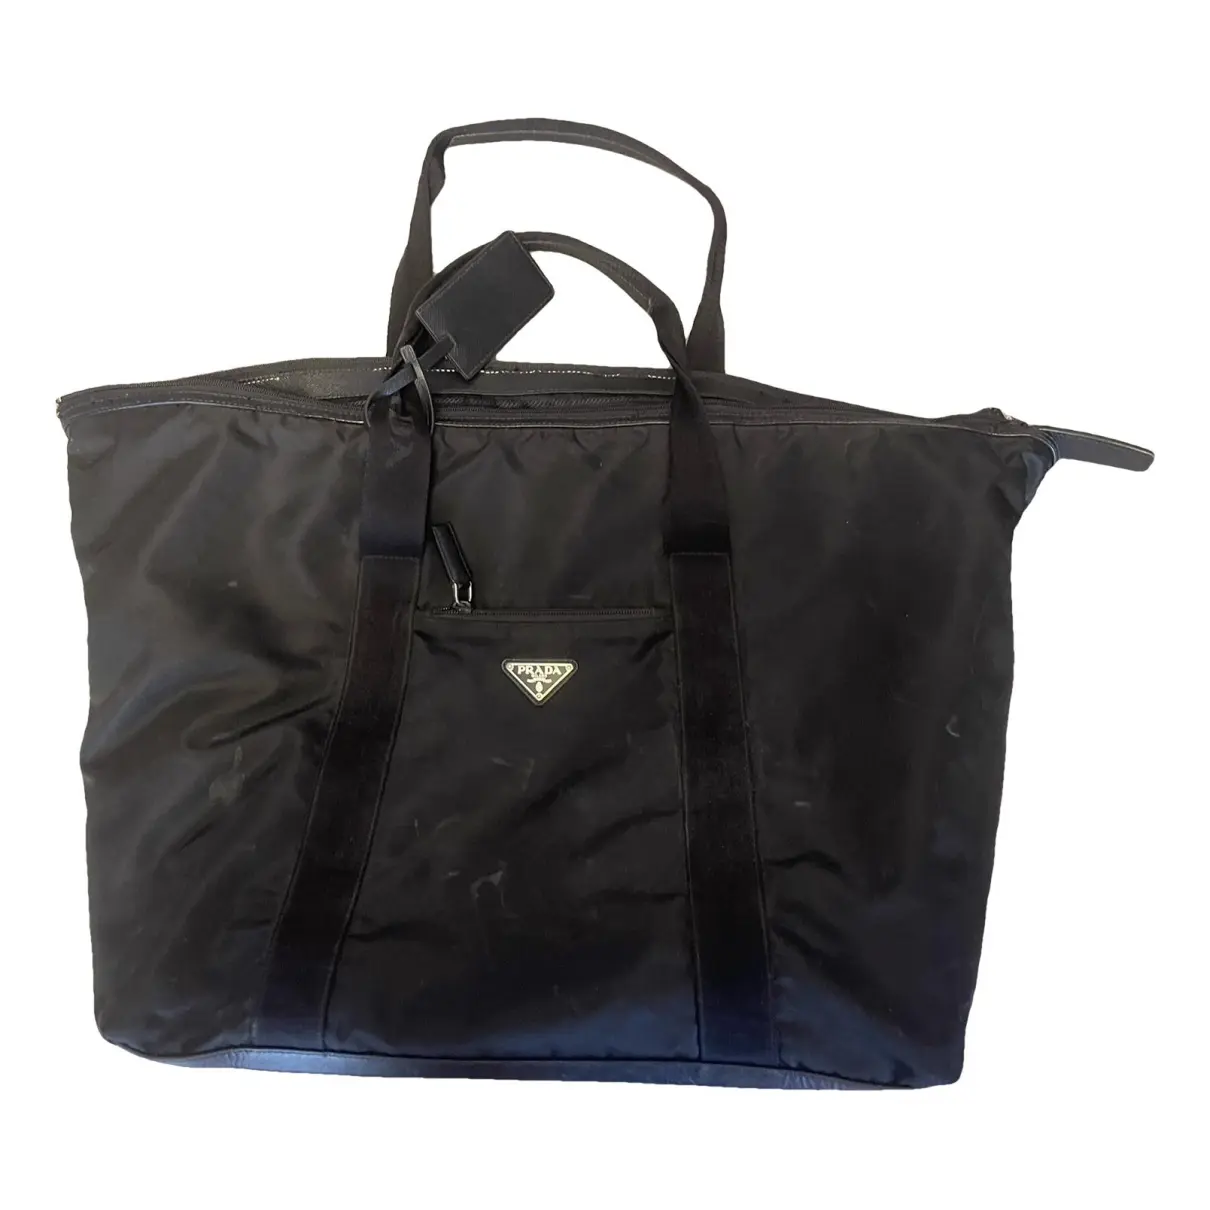 Re-Nylon cloth 24h bag